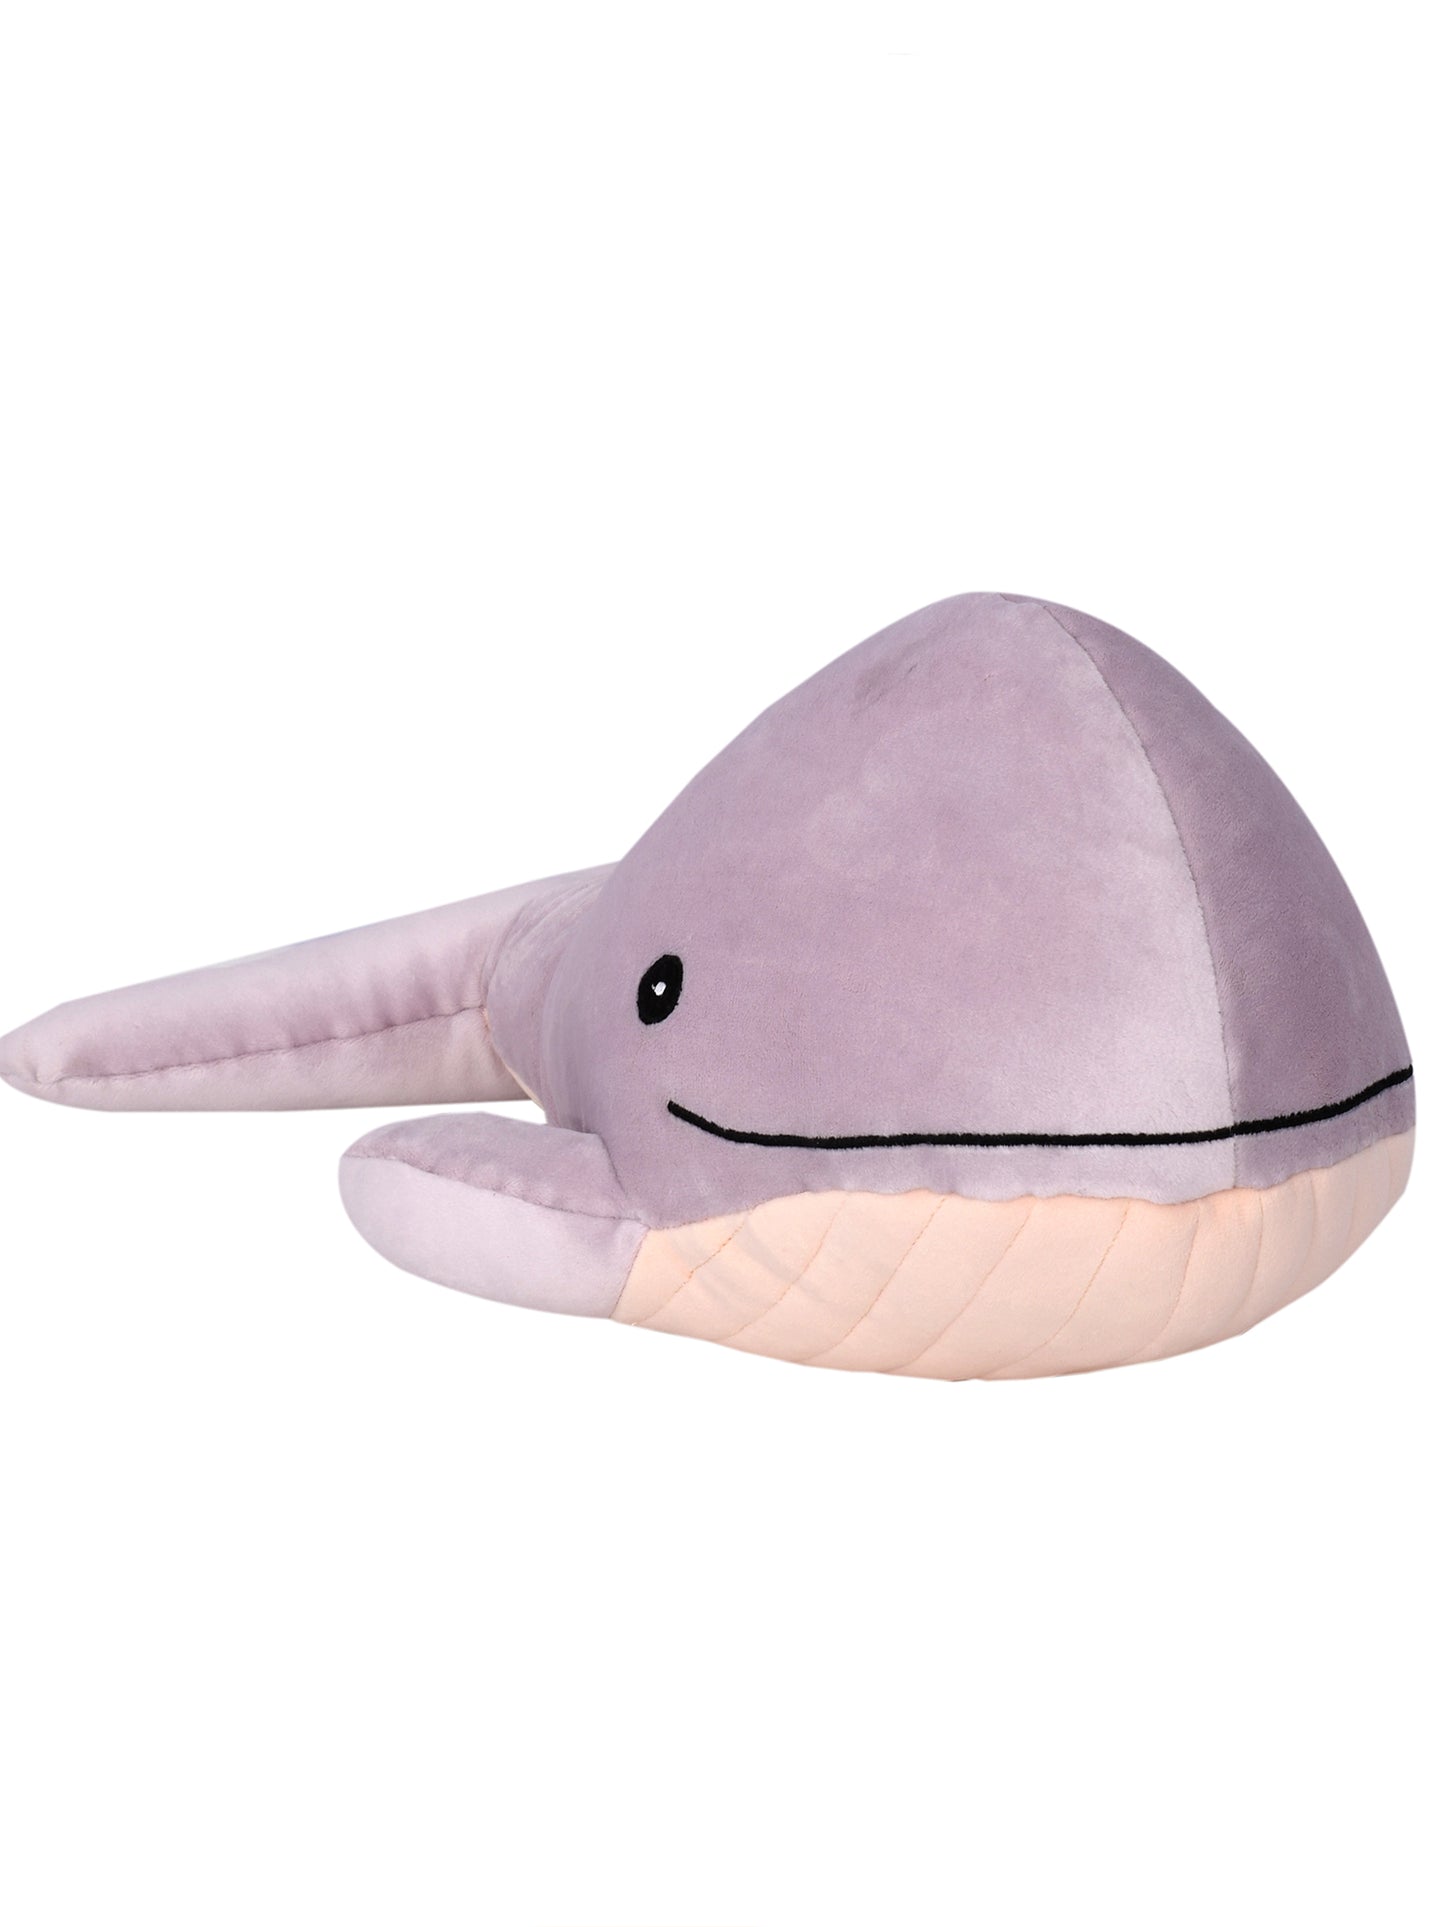 Mirada Big Floppy Plush Stuffed Whale Soft Toy -Purple(47cm)